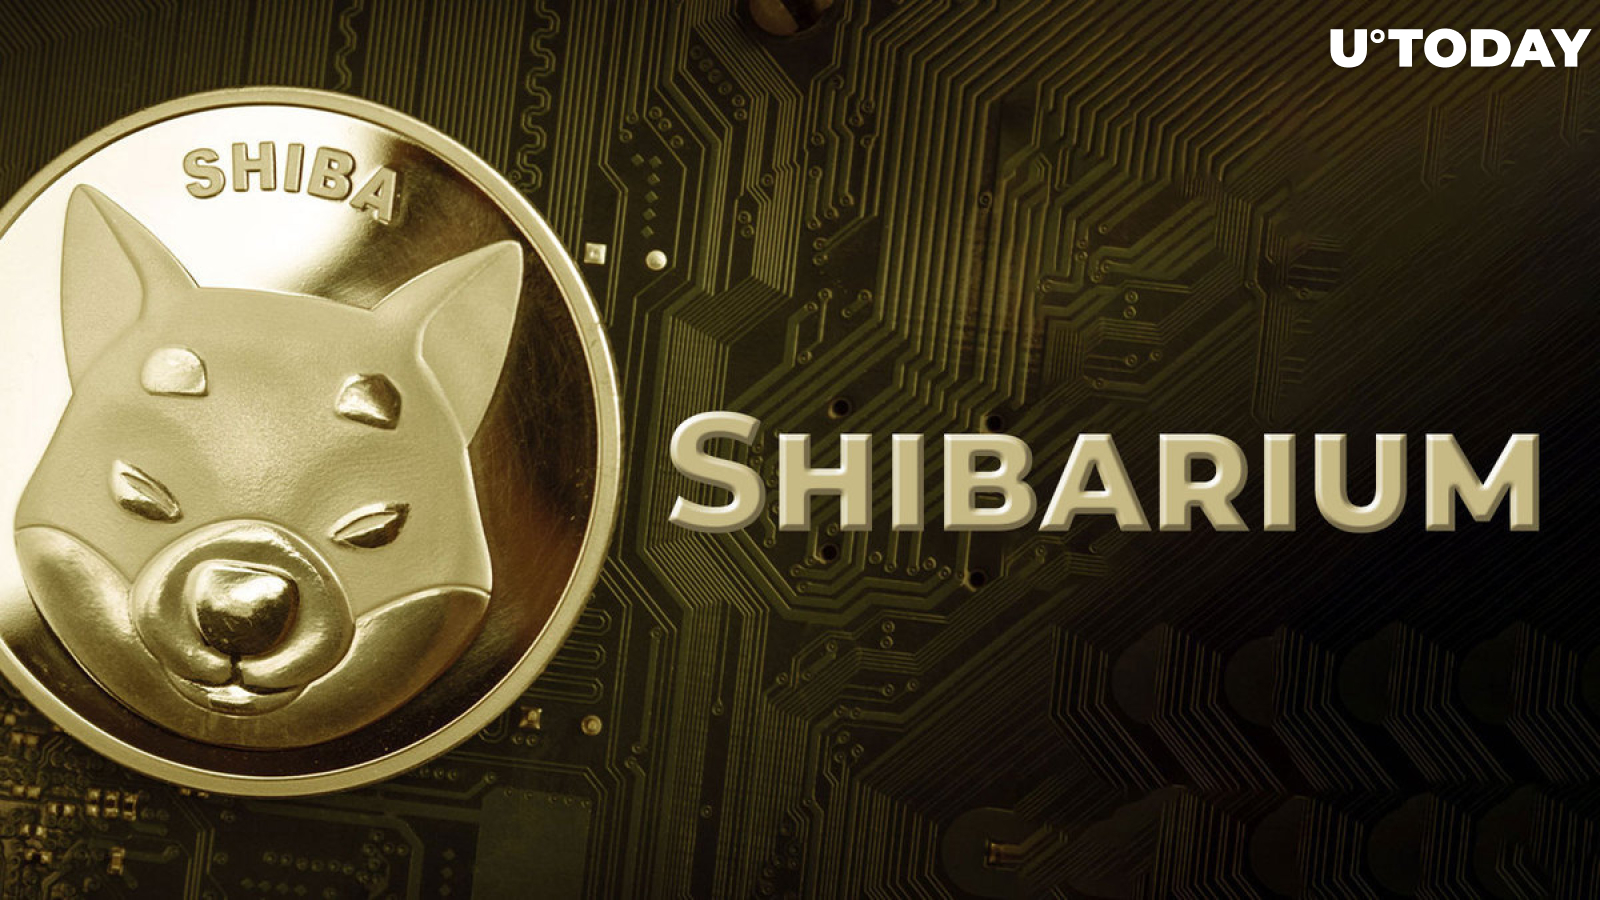 Shibarium Smashes Major New Utility Milestone: Details